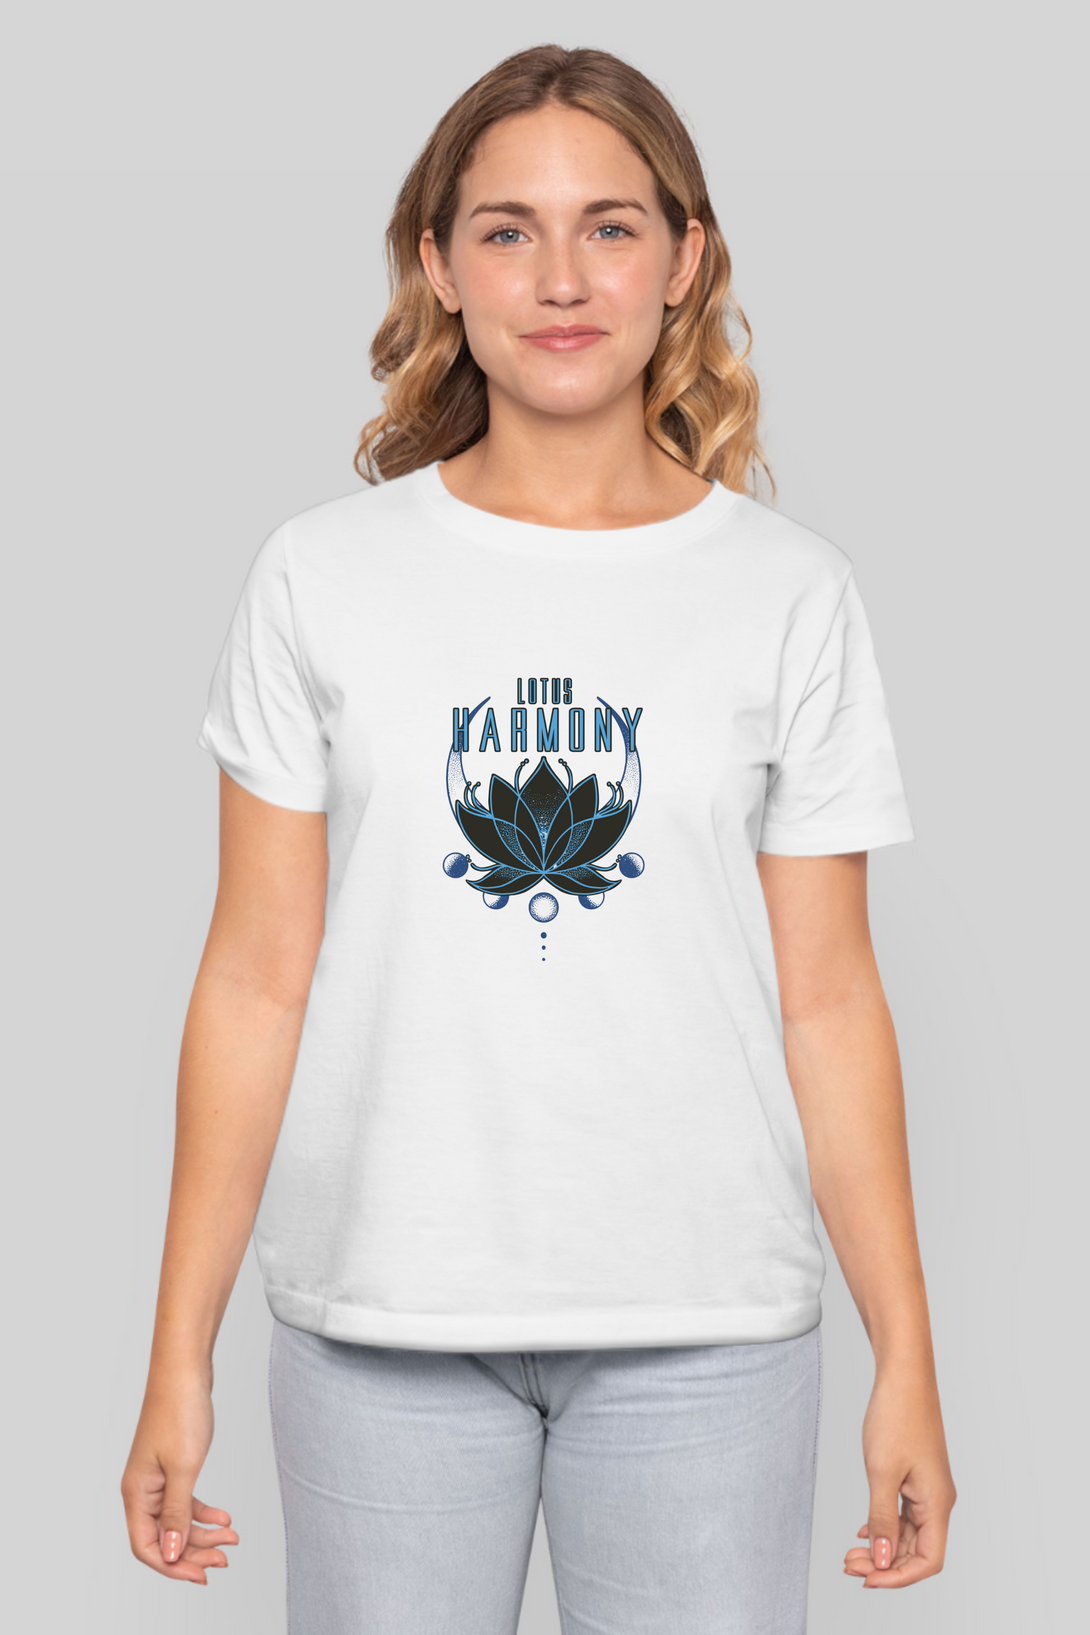 Harmony Lotus Printed T-Shirt For Women - WowWaves - 8